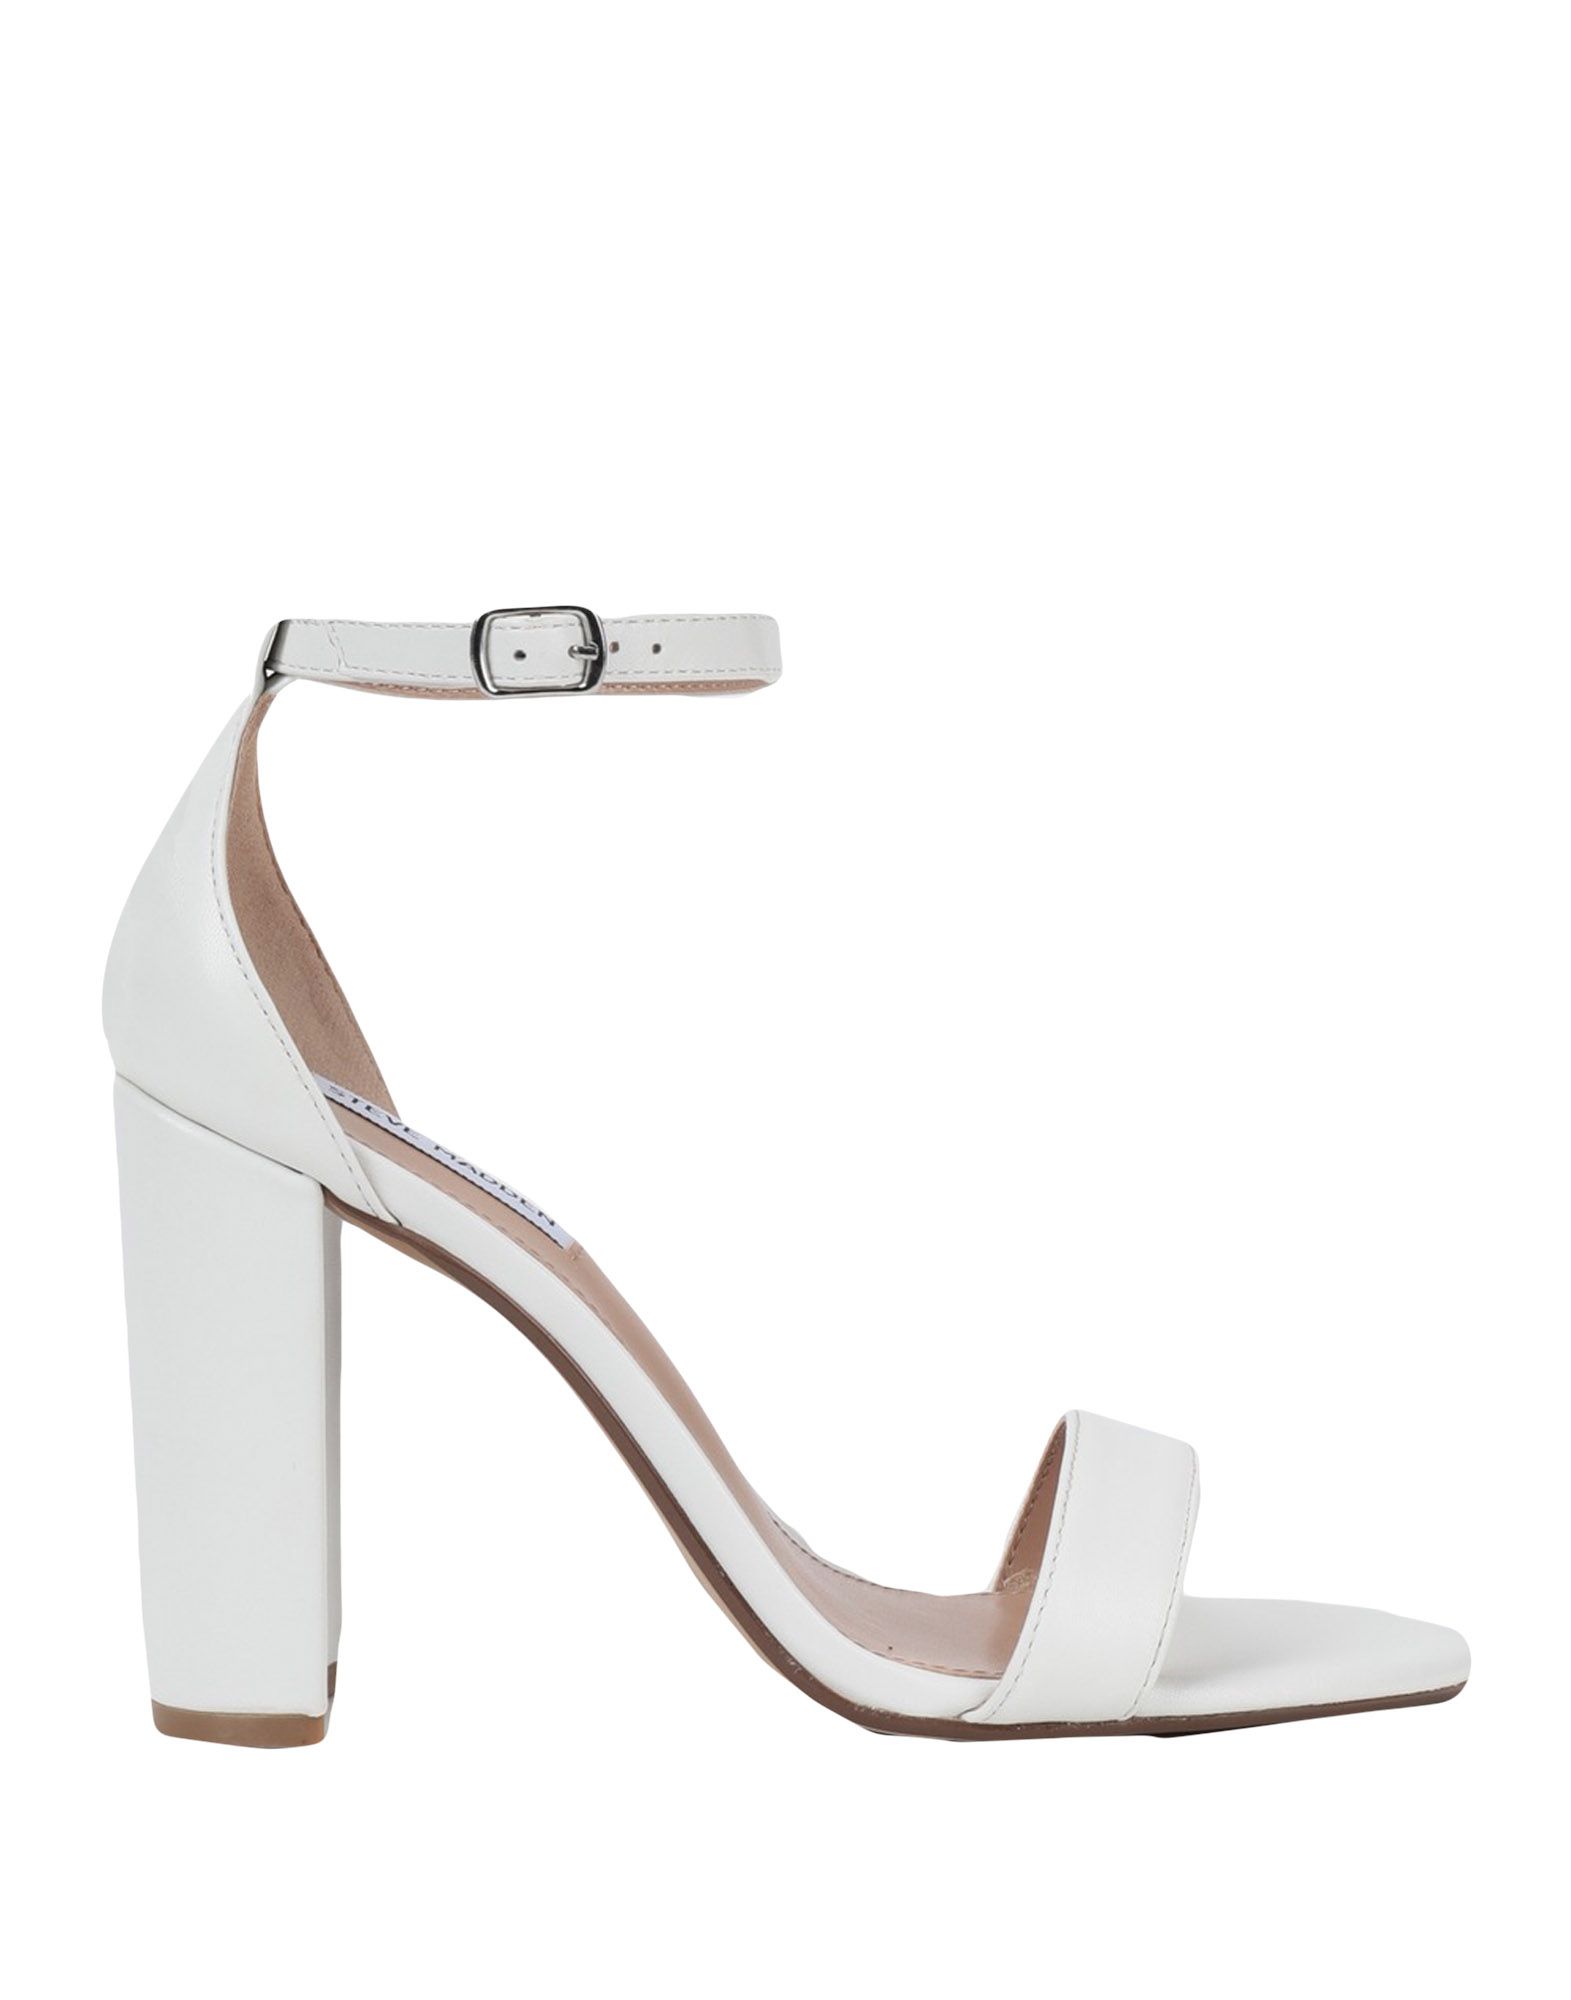 Shop Steve Madden Carrson Woman Sandals White Size 10 Soft Leather